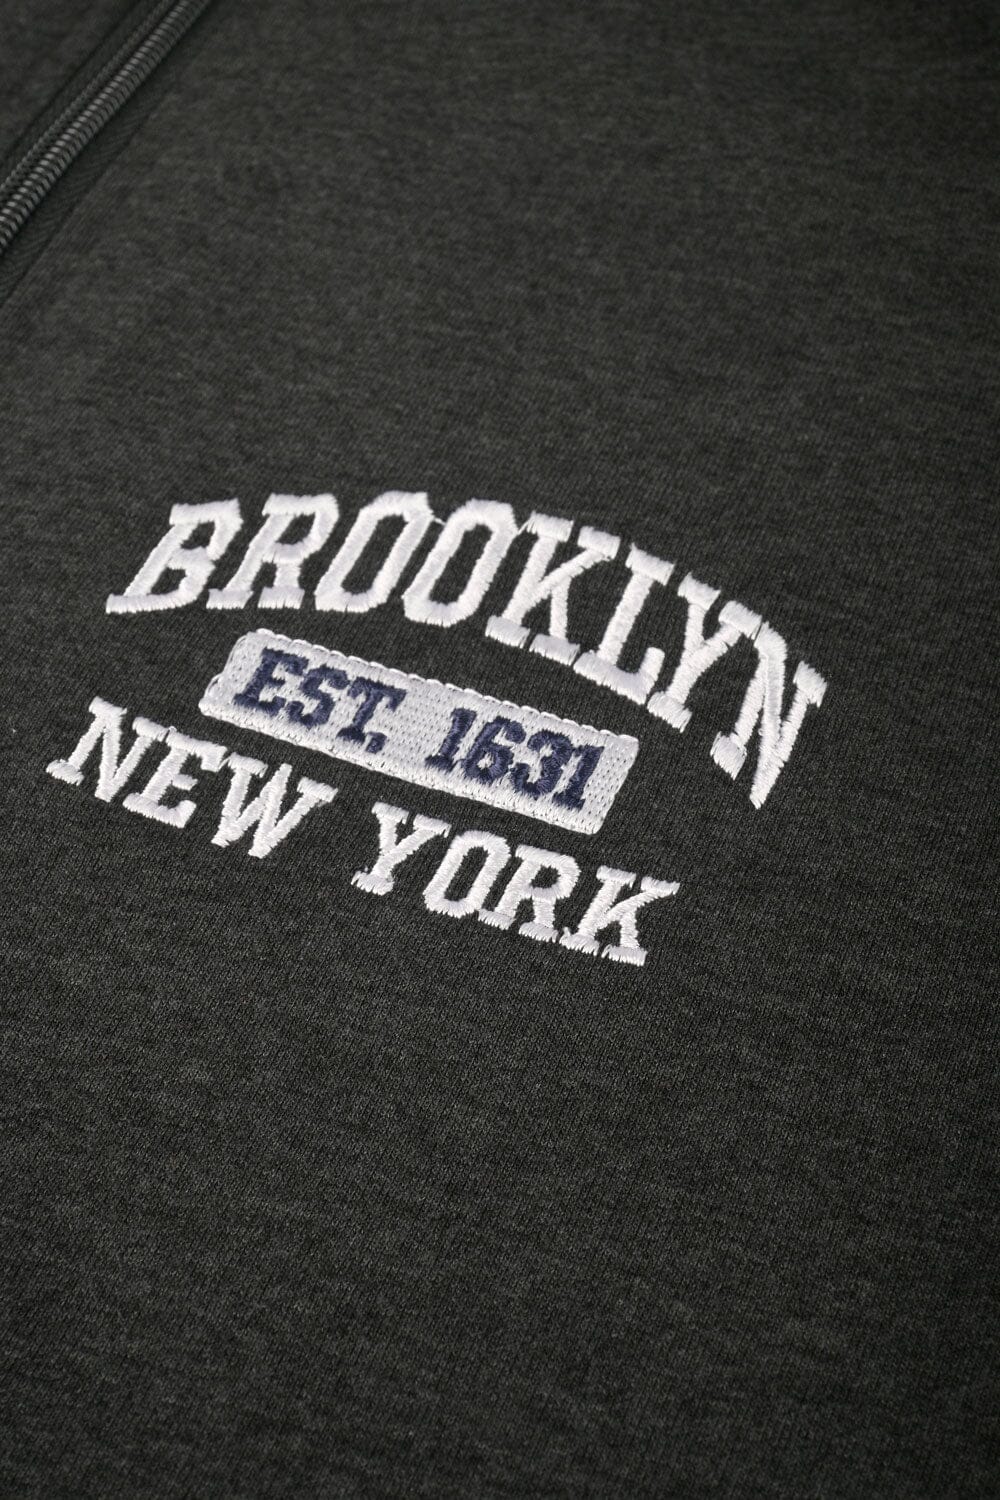 Polo Republica Men's Quarter Zipper Brooklyn Embroidered Terry Sweat Shirt Men's Sweat Shirt Polo Republica 